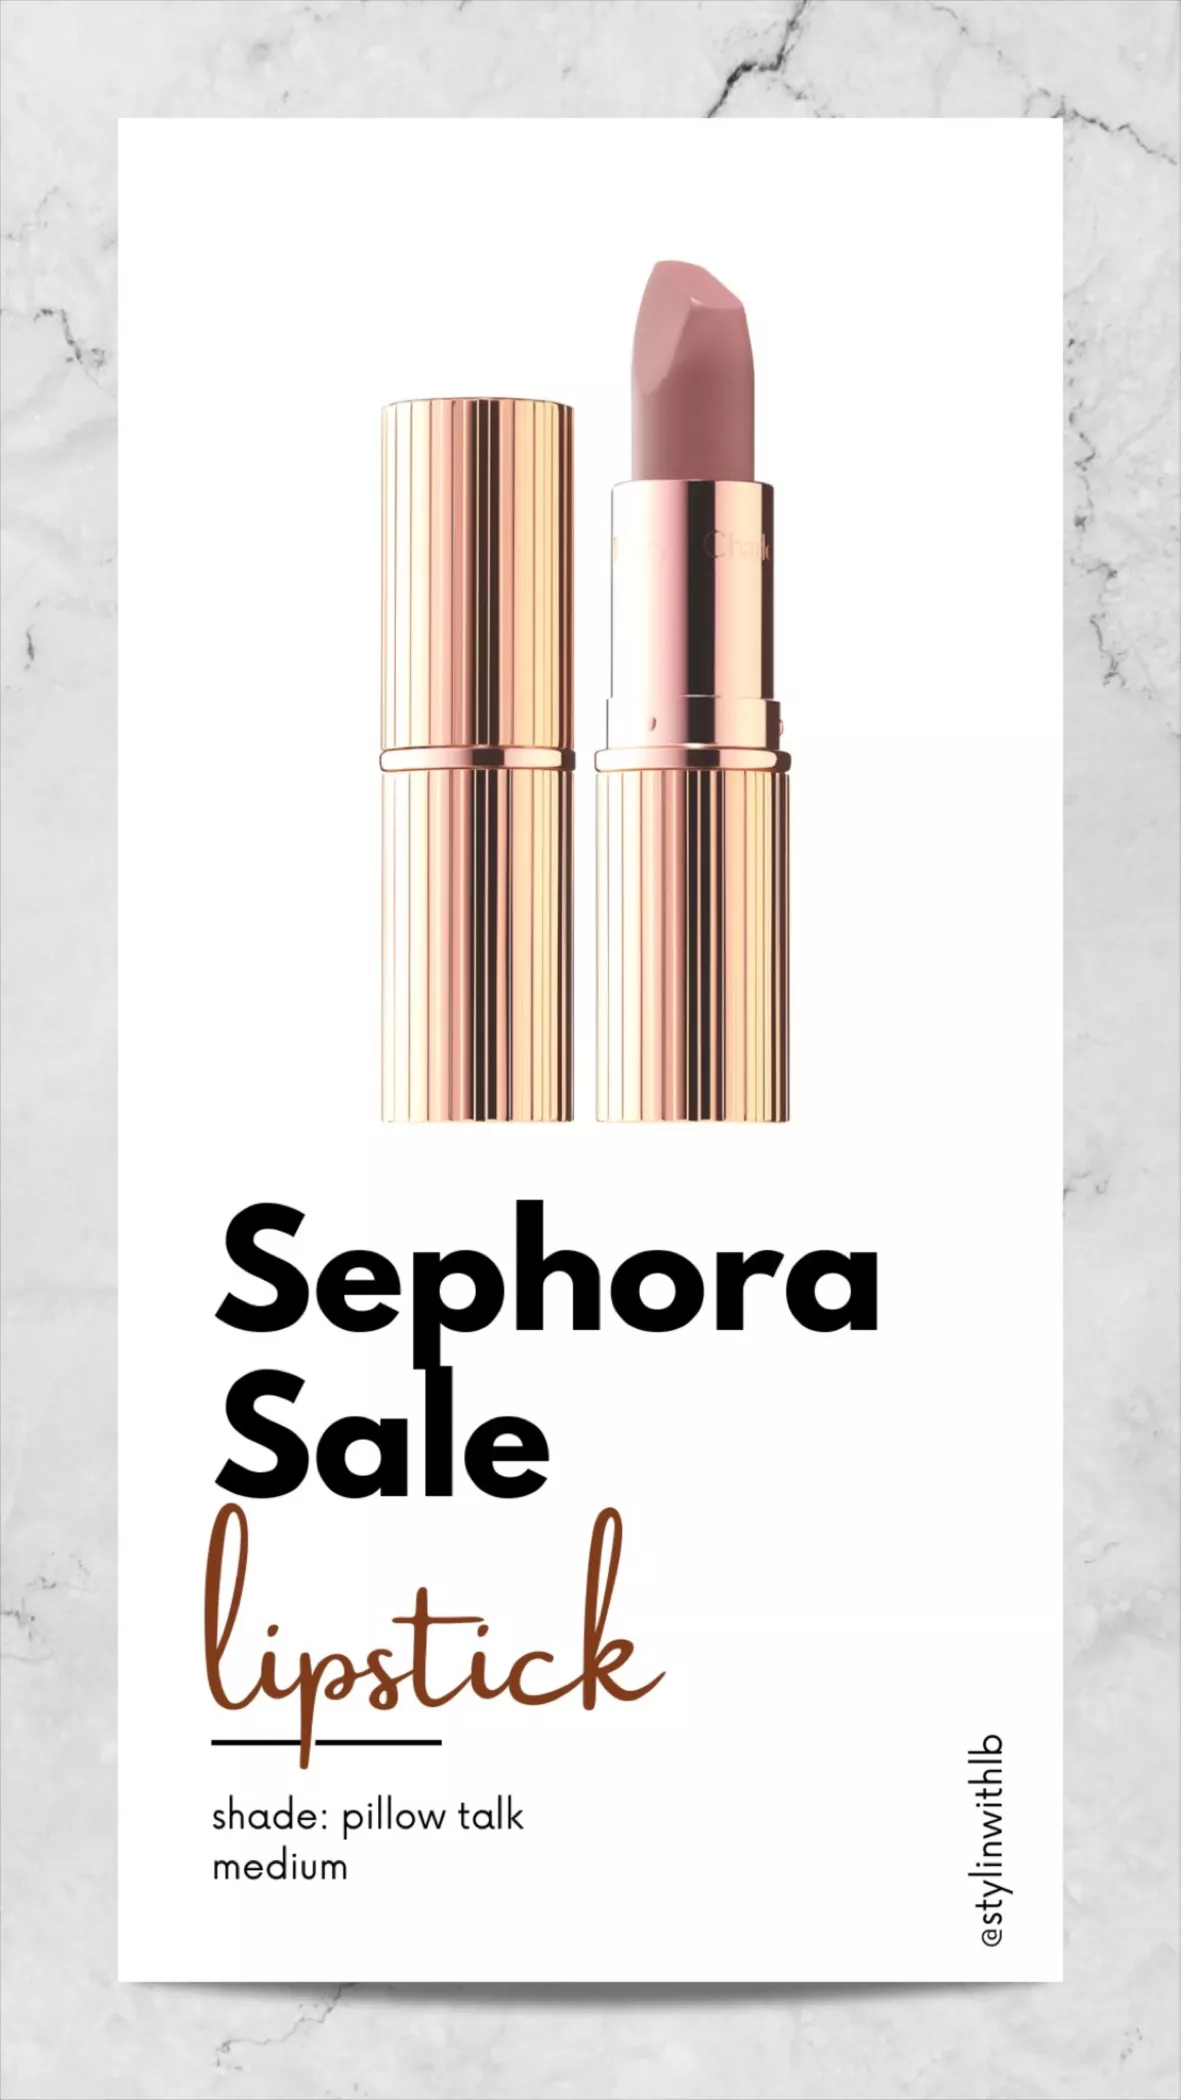 Sephora's Beauty Revolution